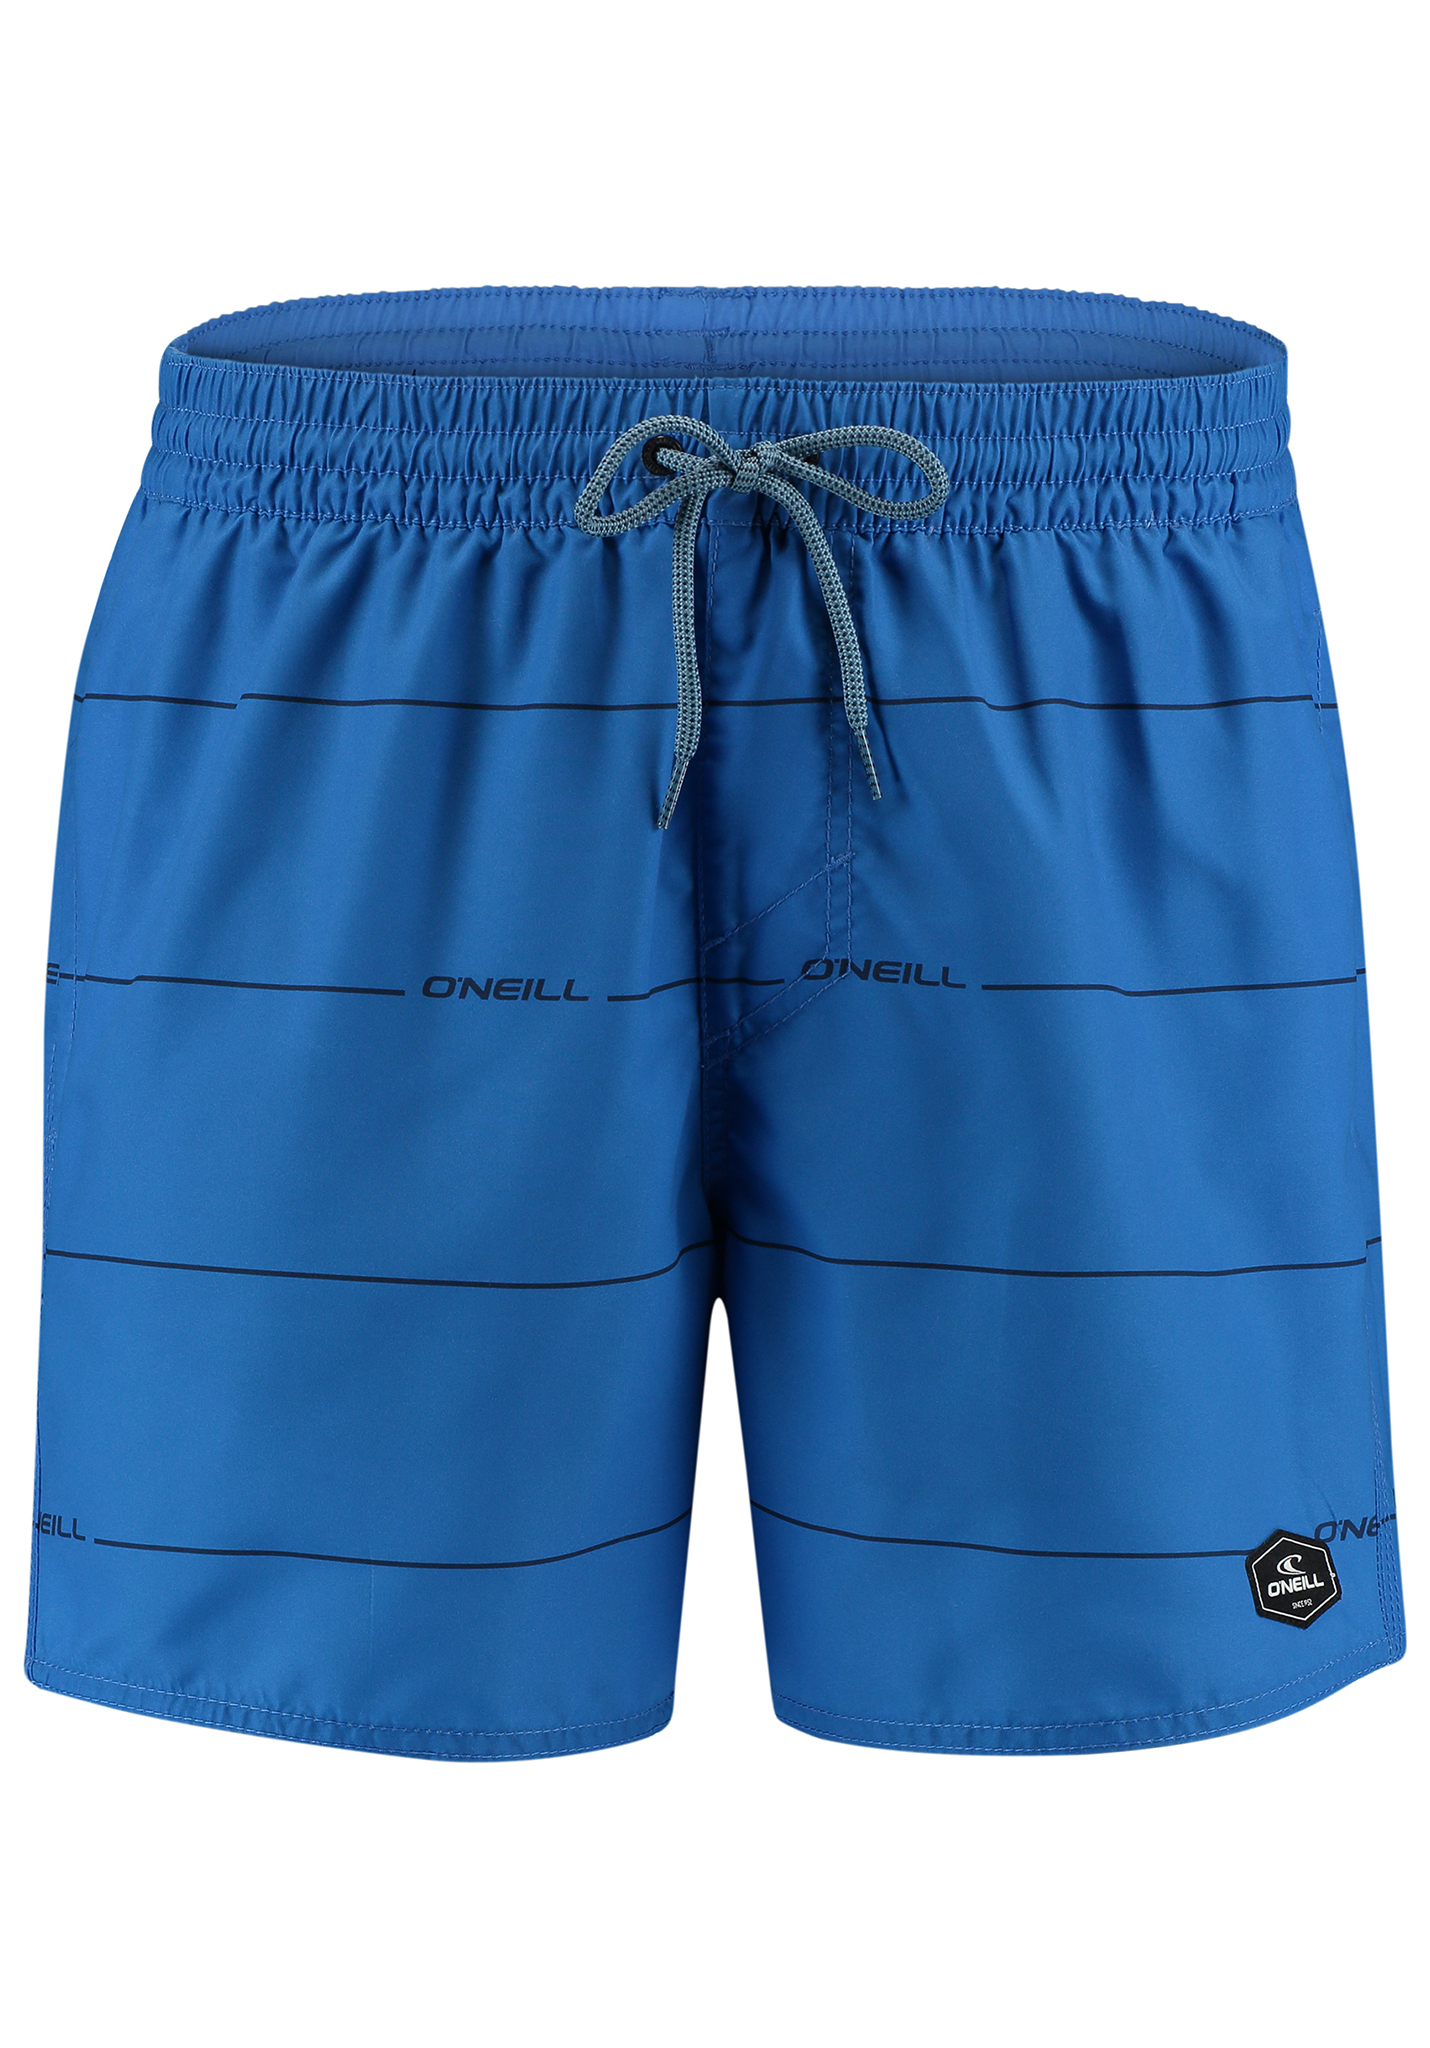 O'Neill Contourz Boardshorts blau aop m/ gelb-orange S